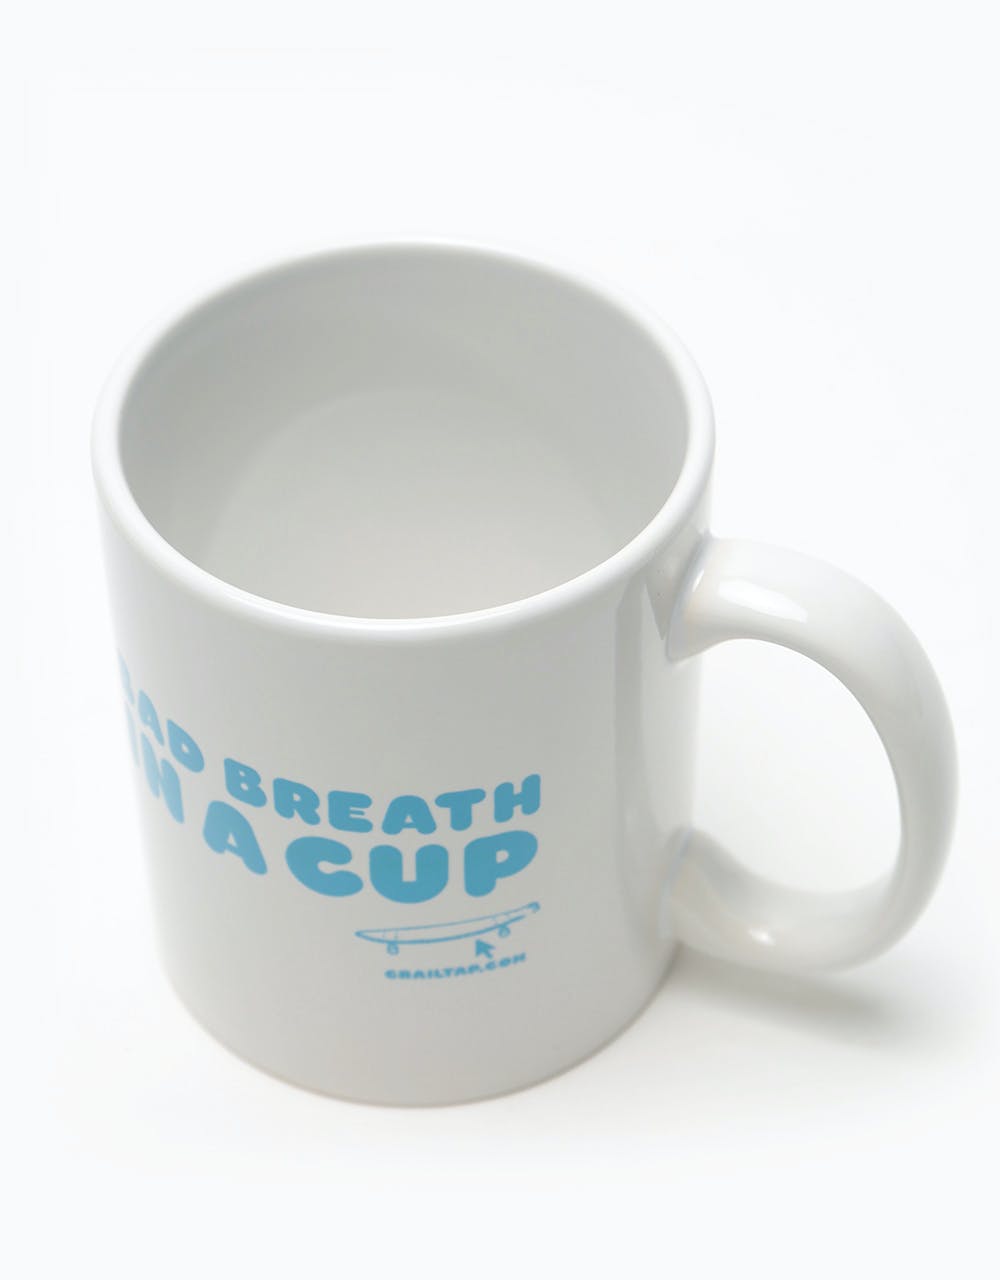 Crailtap Bad Breath Mug - White